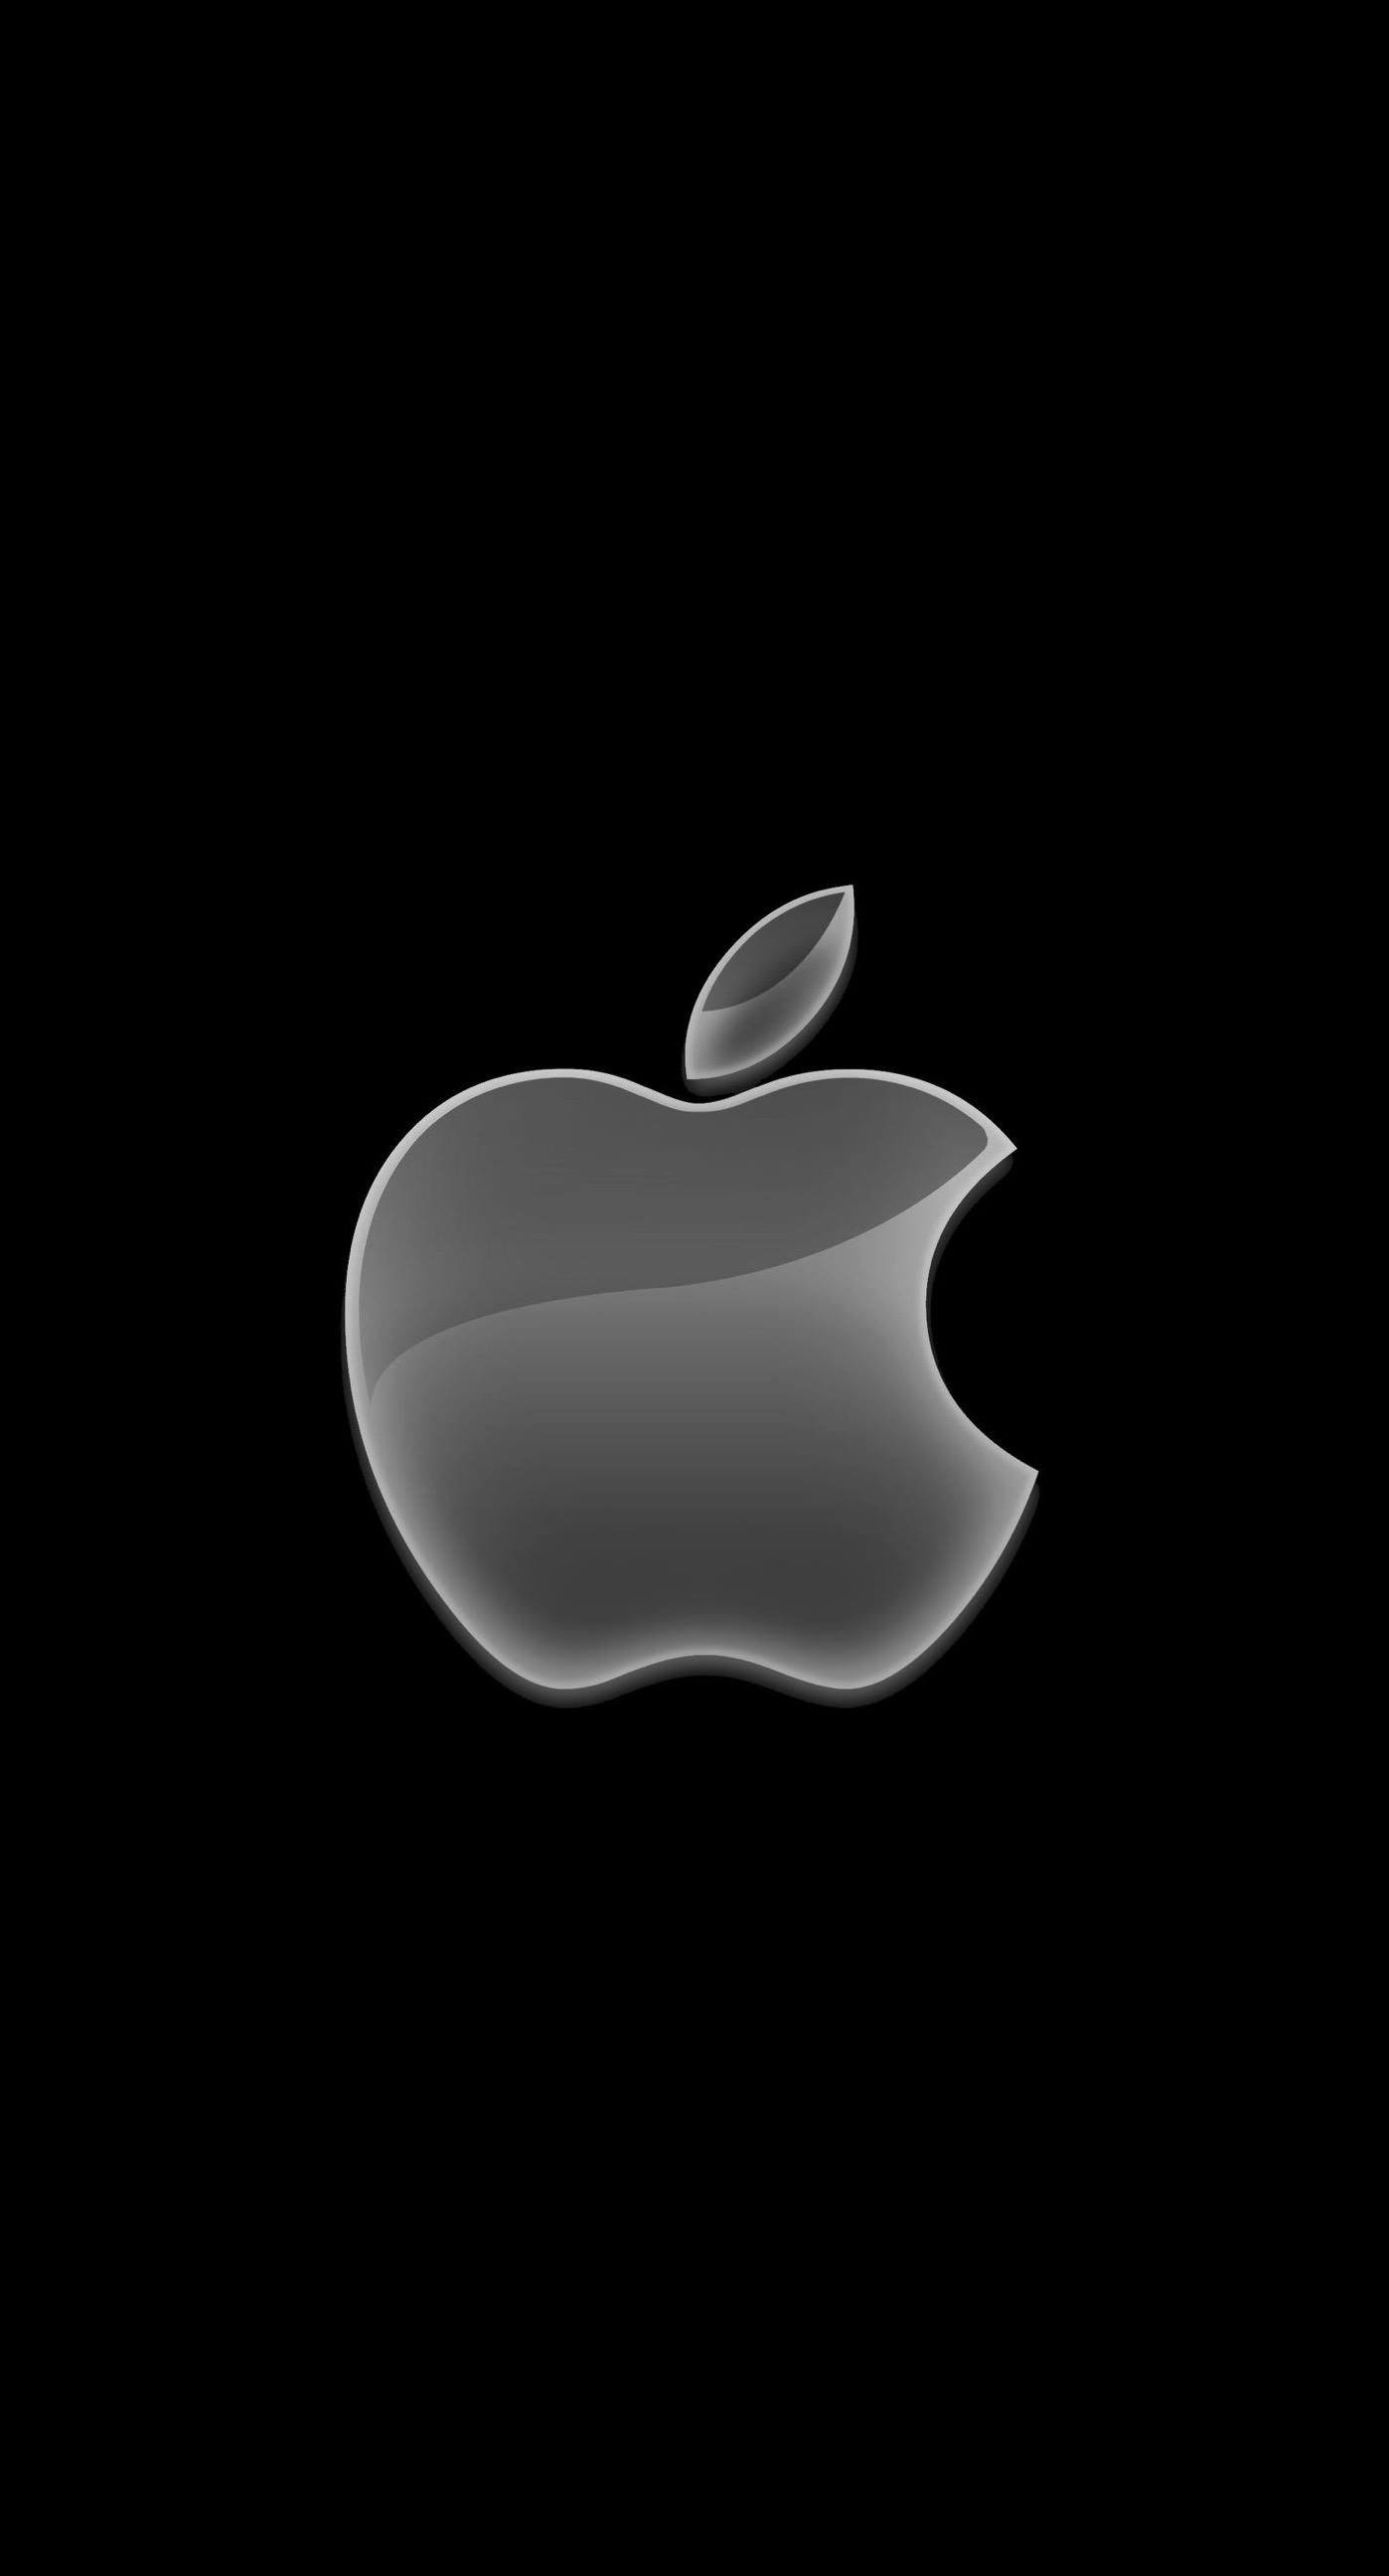 Apple Logo Wallpaper Iphone 7 Plus